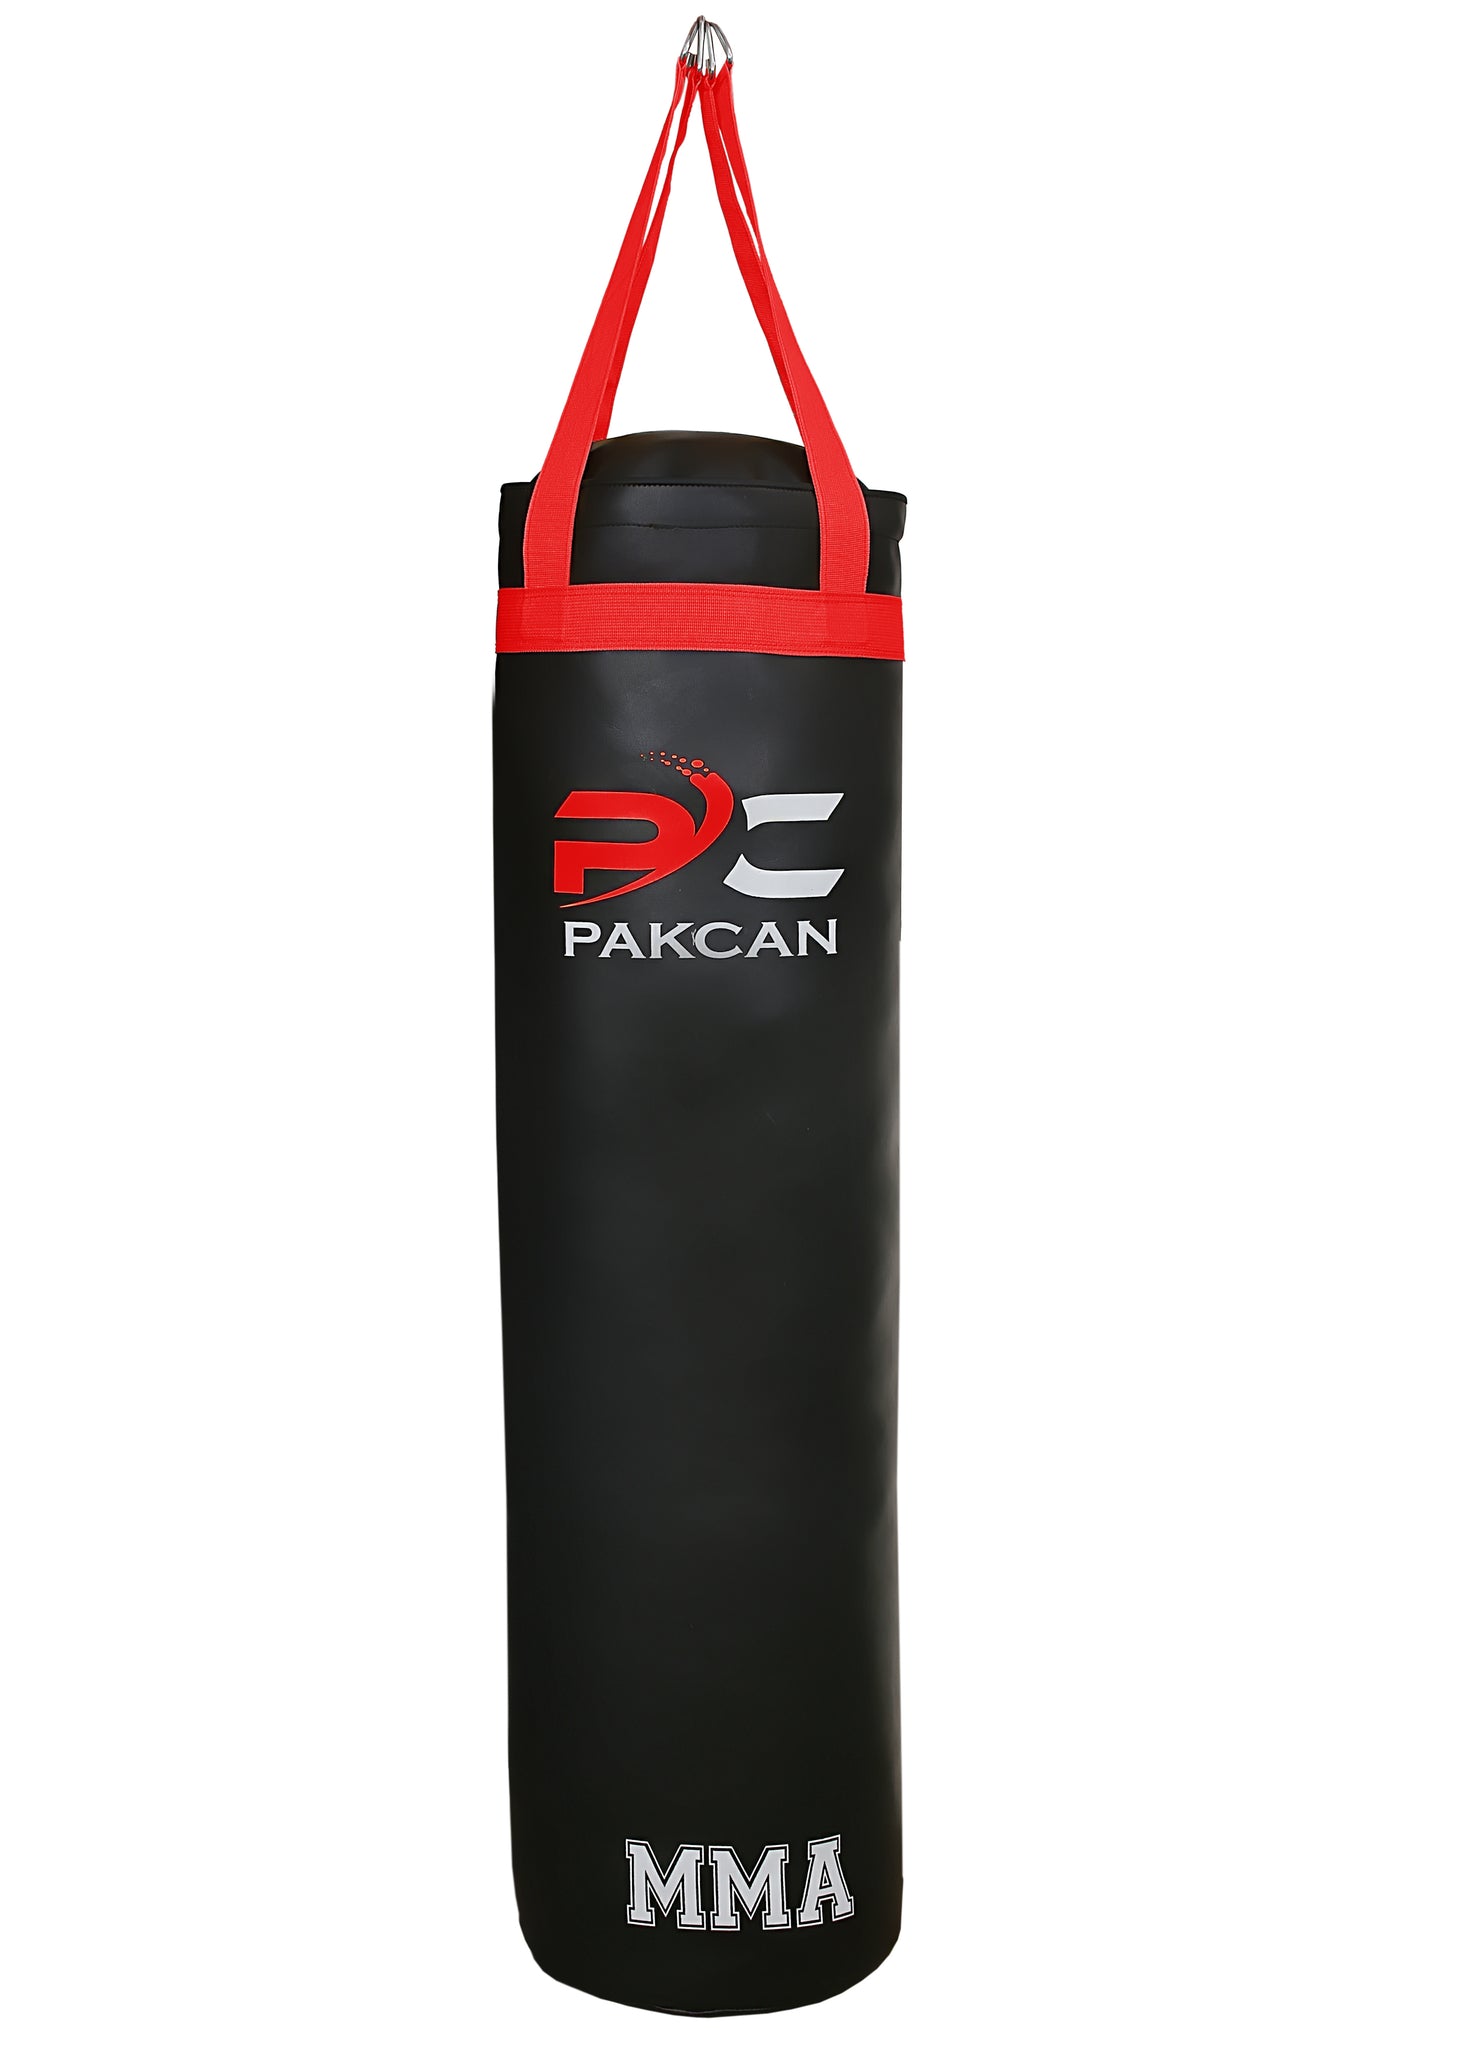 5ft Heavy Hanging Punching Bag for Fitness Training, Boxing, MMA Training, Kickboxing, Muai Thai. 